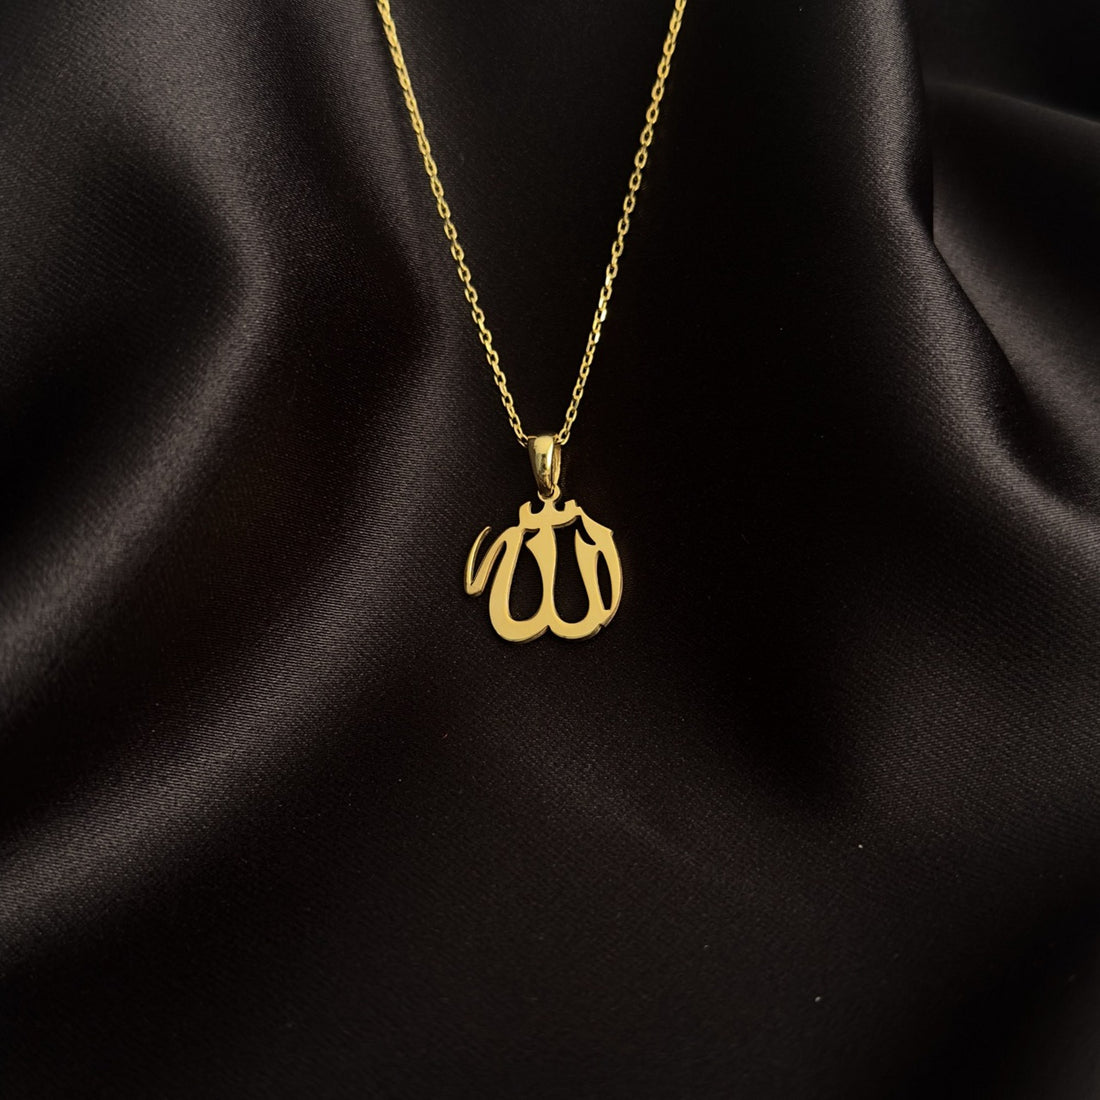 islamic-jewelry-arabic-allah-written-islamic-necklace-18k-gold-pendant-on-925-silver-elegant-calligraphy-design-art-shukranislamicart